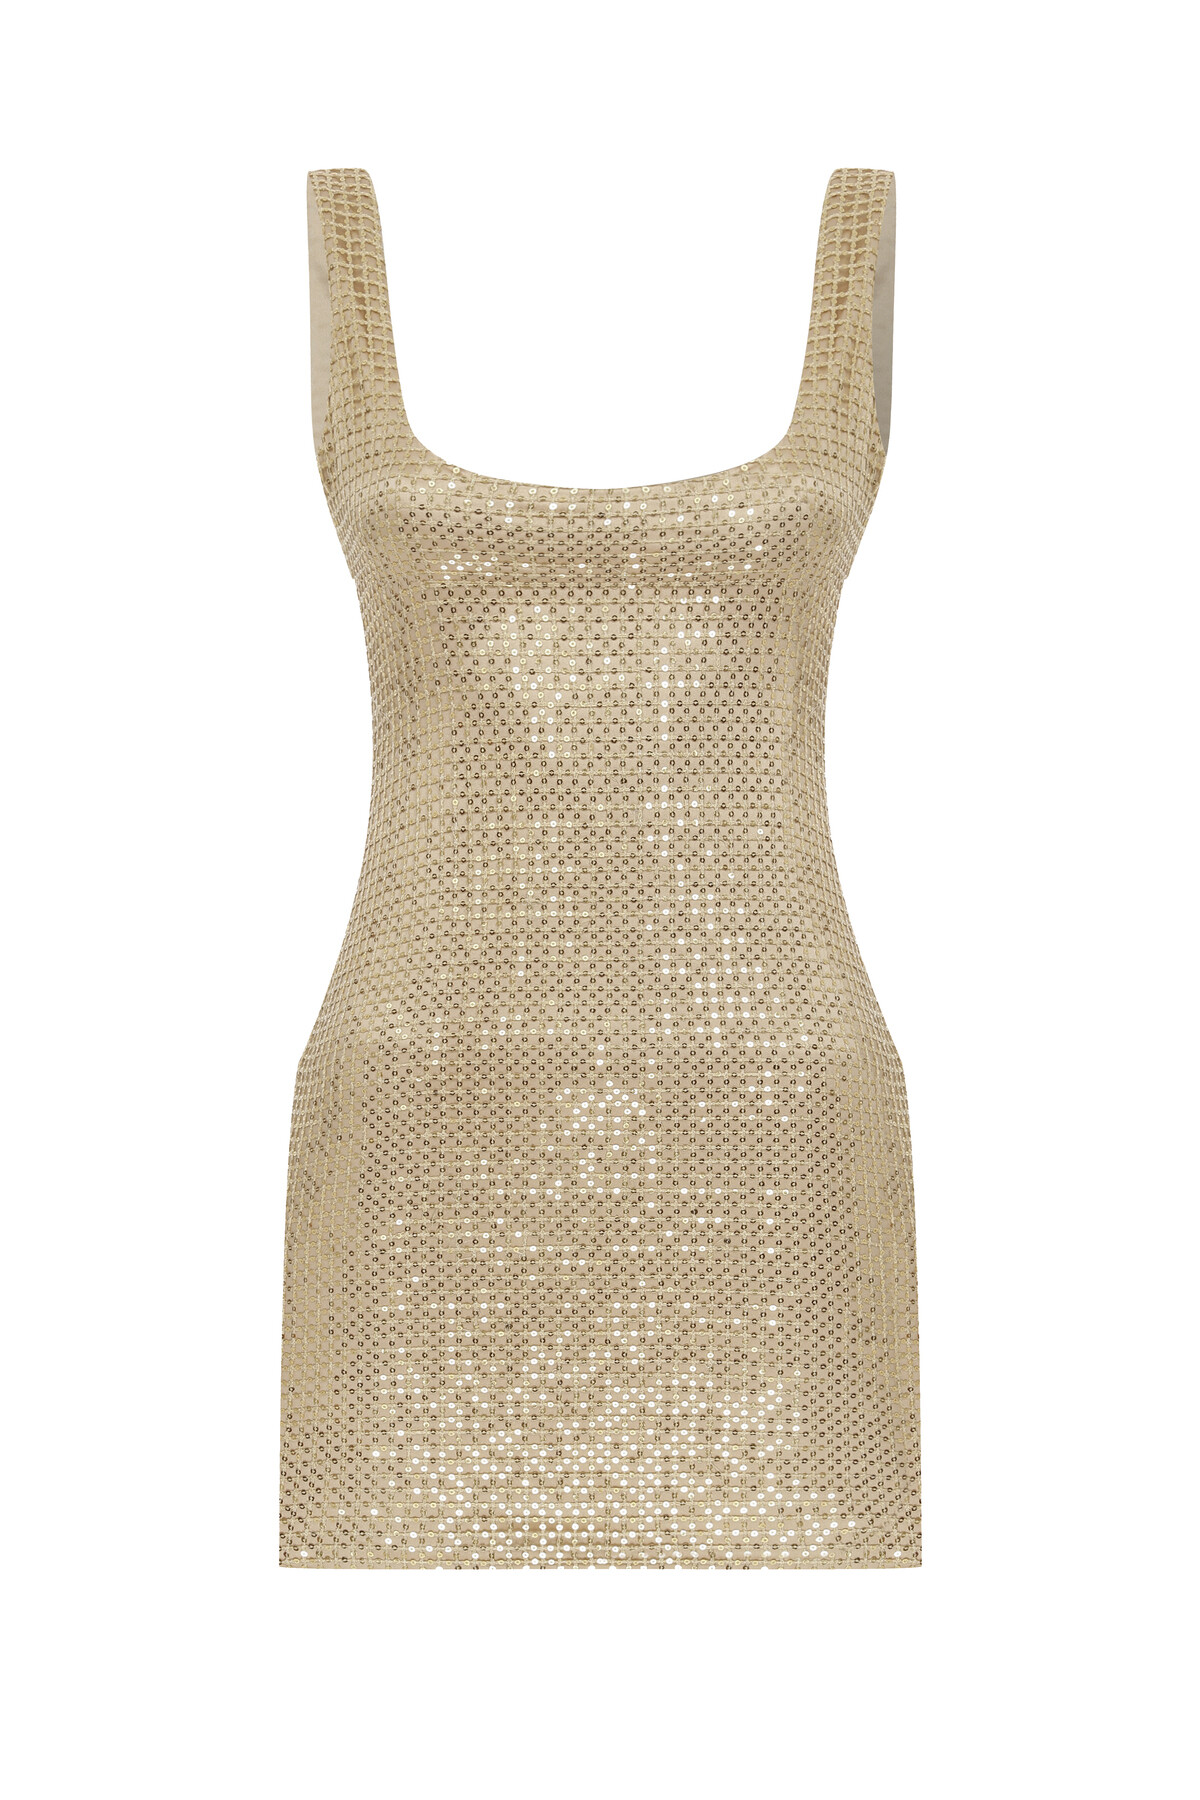 IZABEL Sequin Detailed Netted Dress